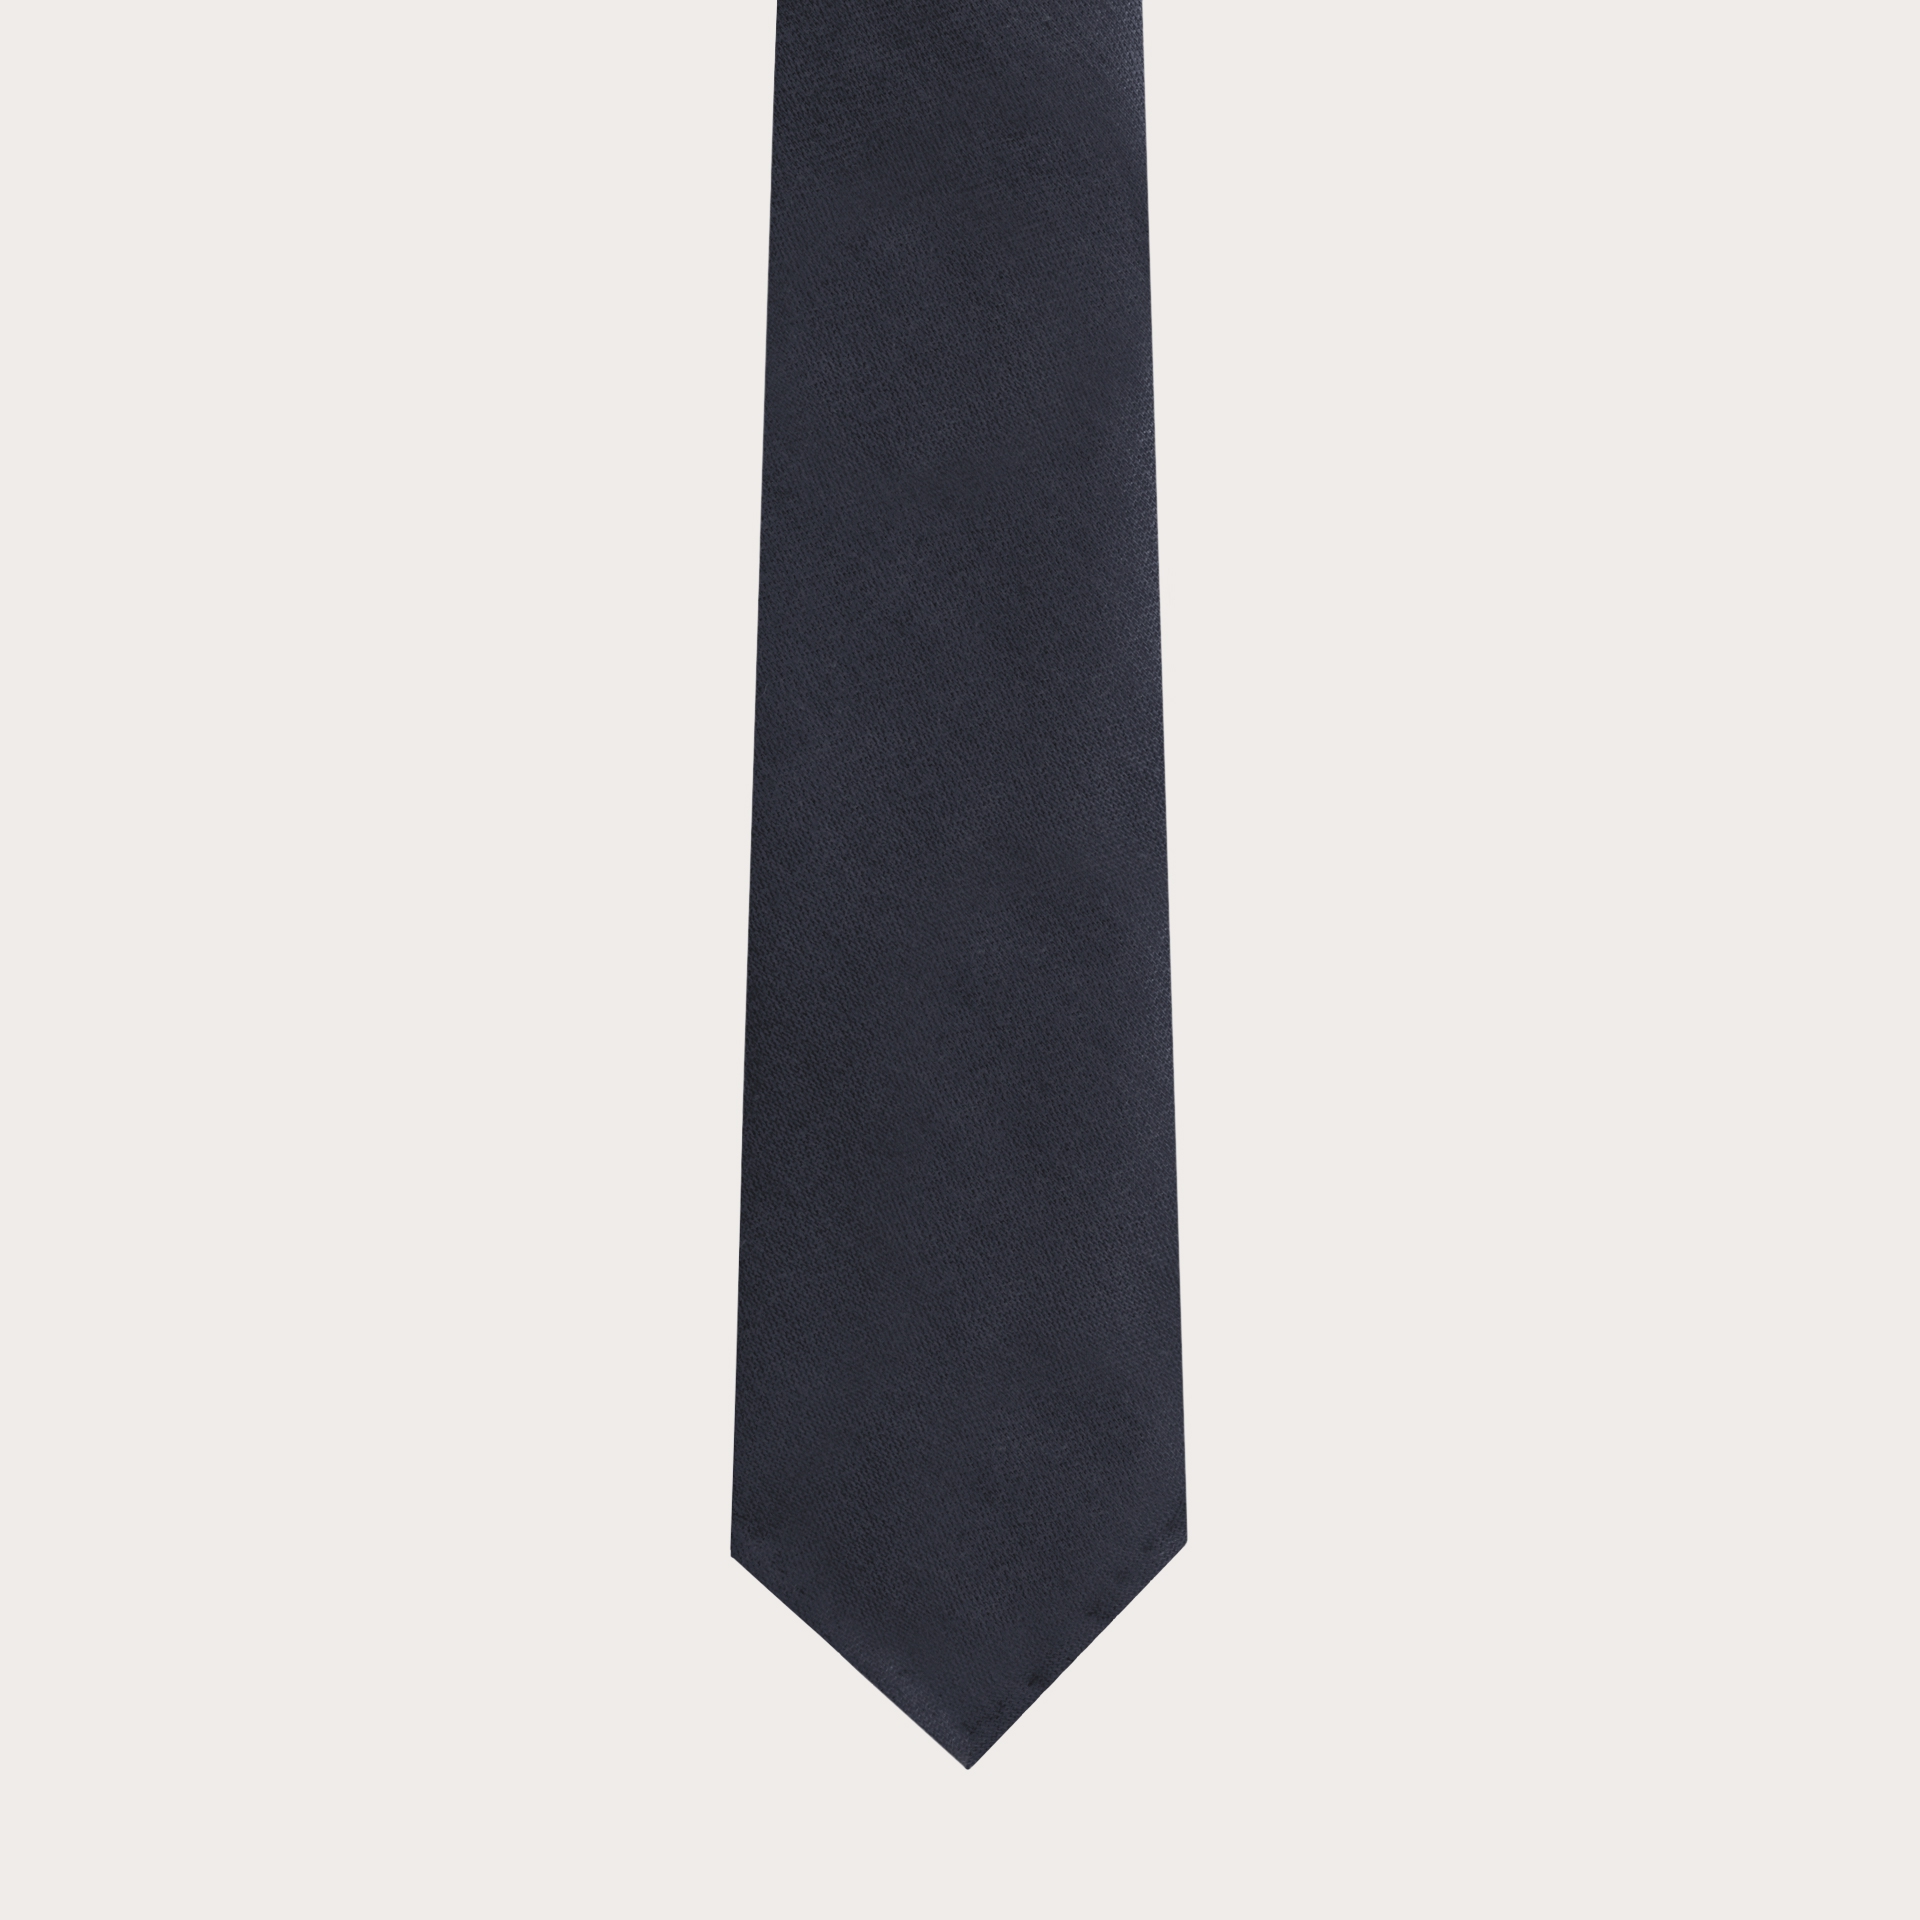 Unlined tie in virgin wool and hemp, navy blue